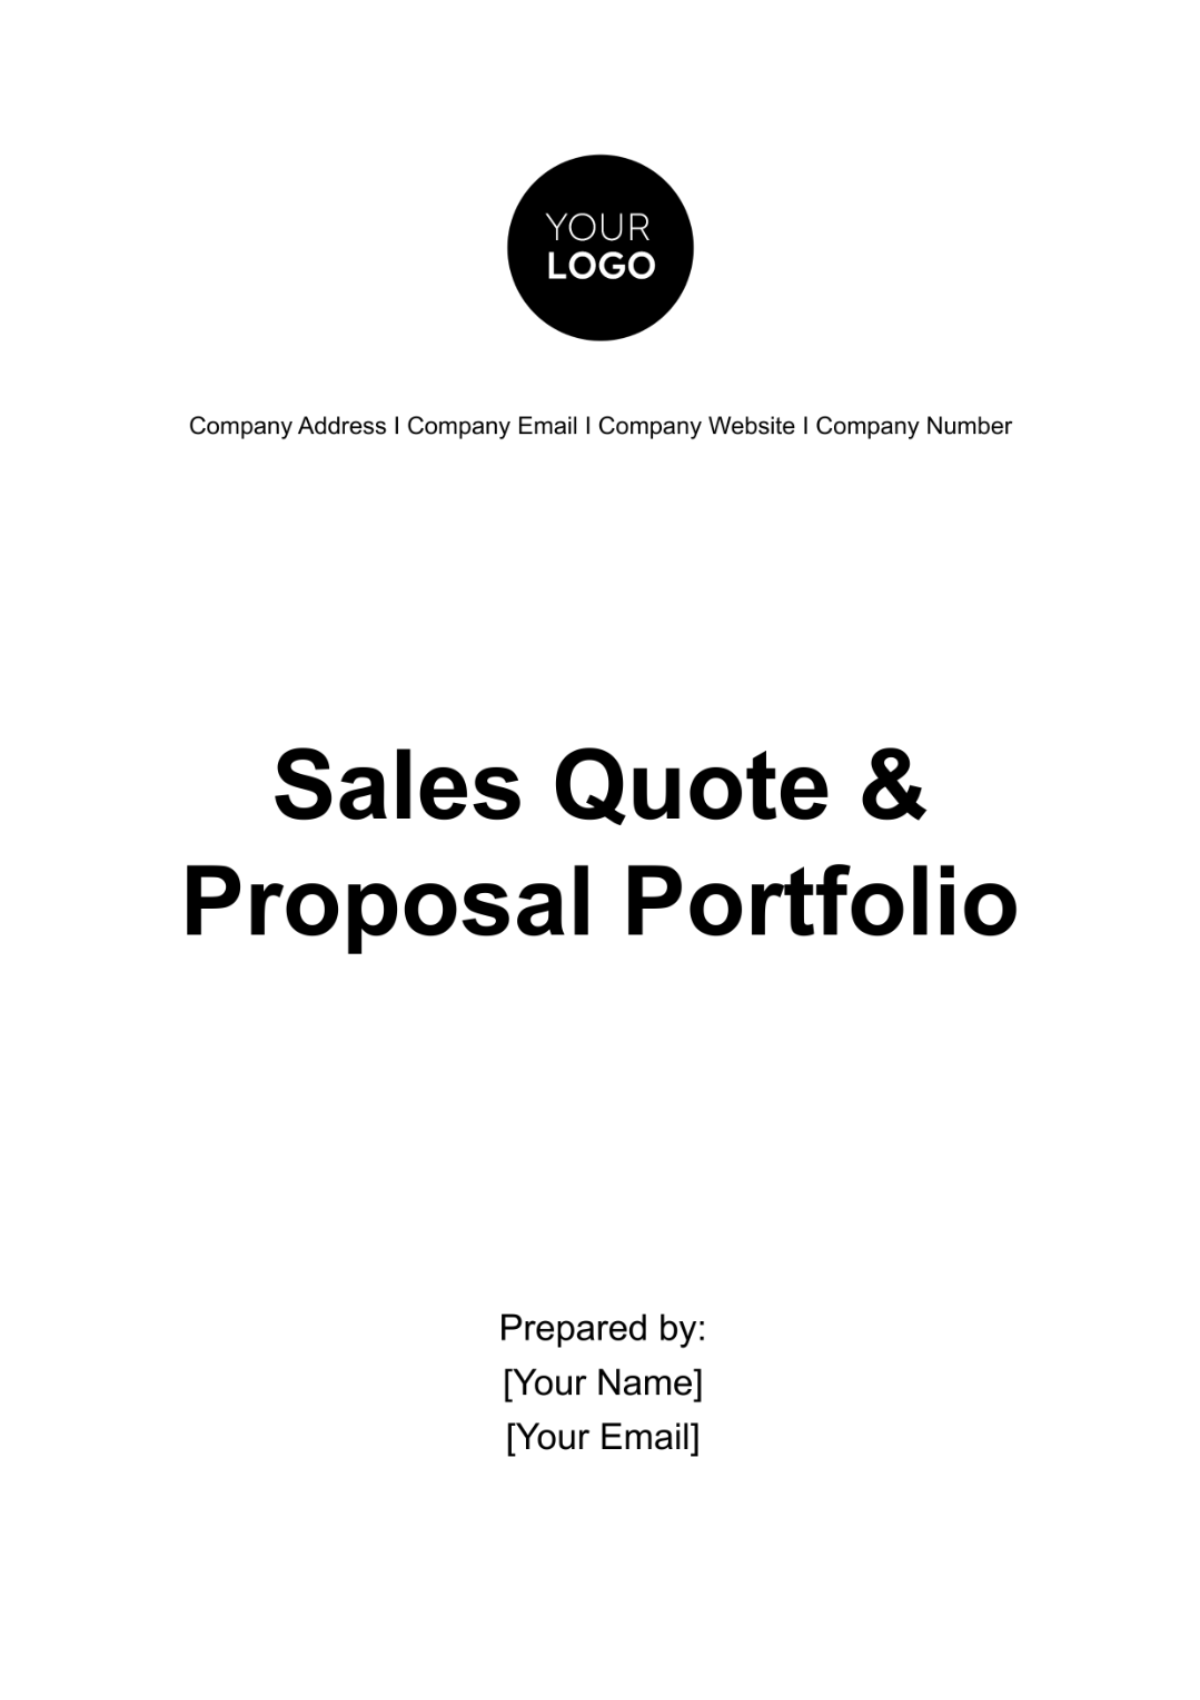 Free Sales Quote & Proposal Portfolio Template